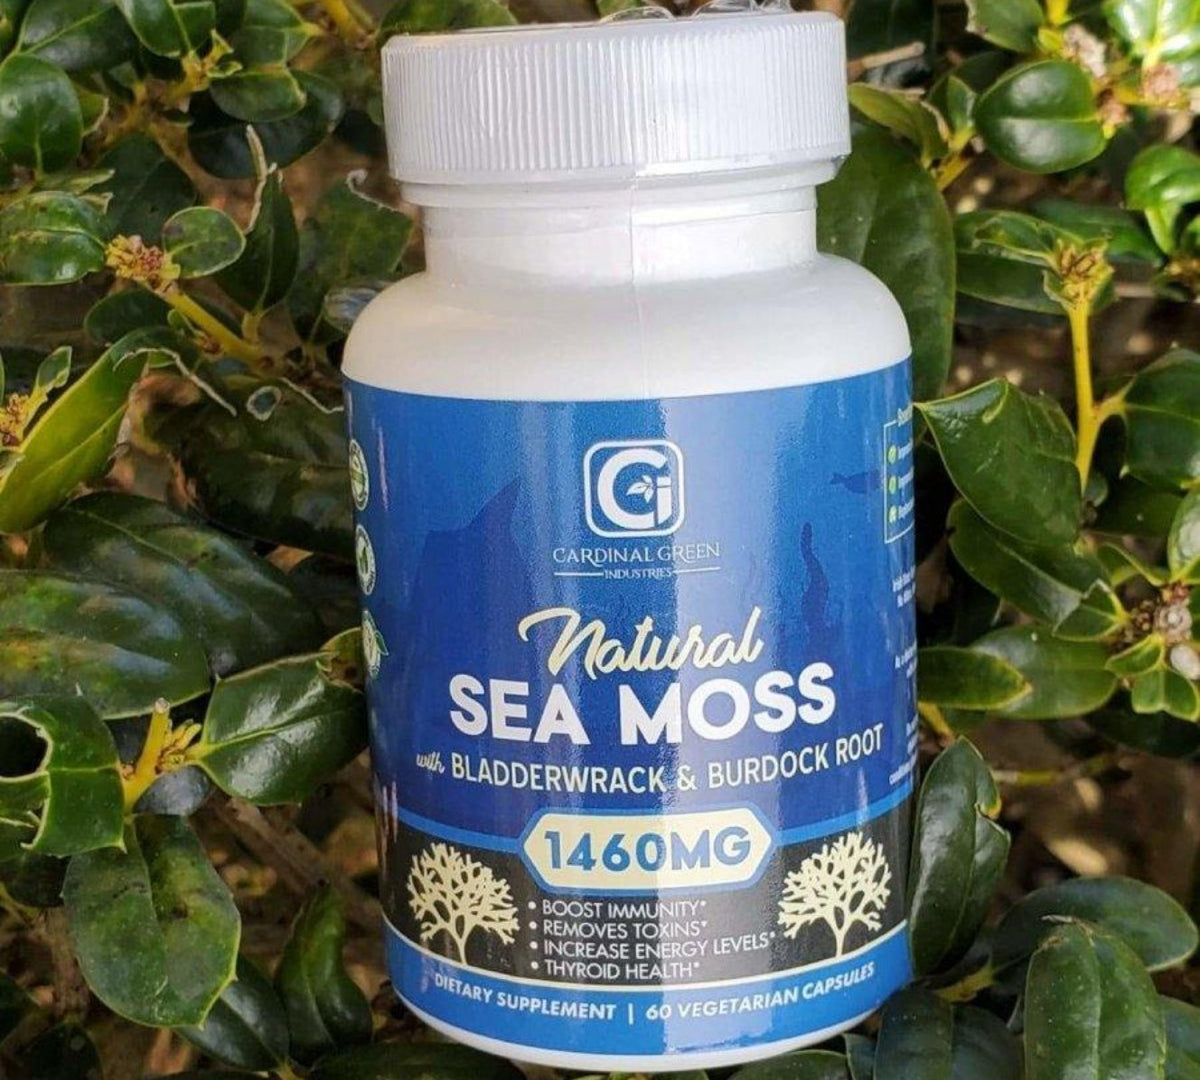 60 Natural Sea Moss With Bladderwrack And Burdock Root Capsules Cgi Green 